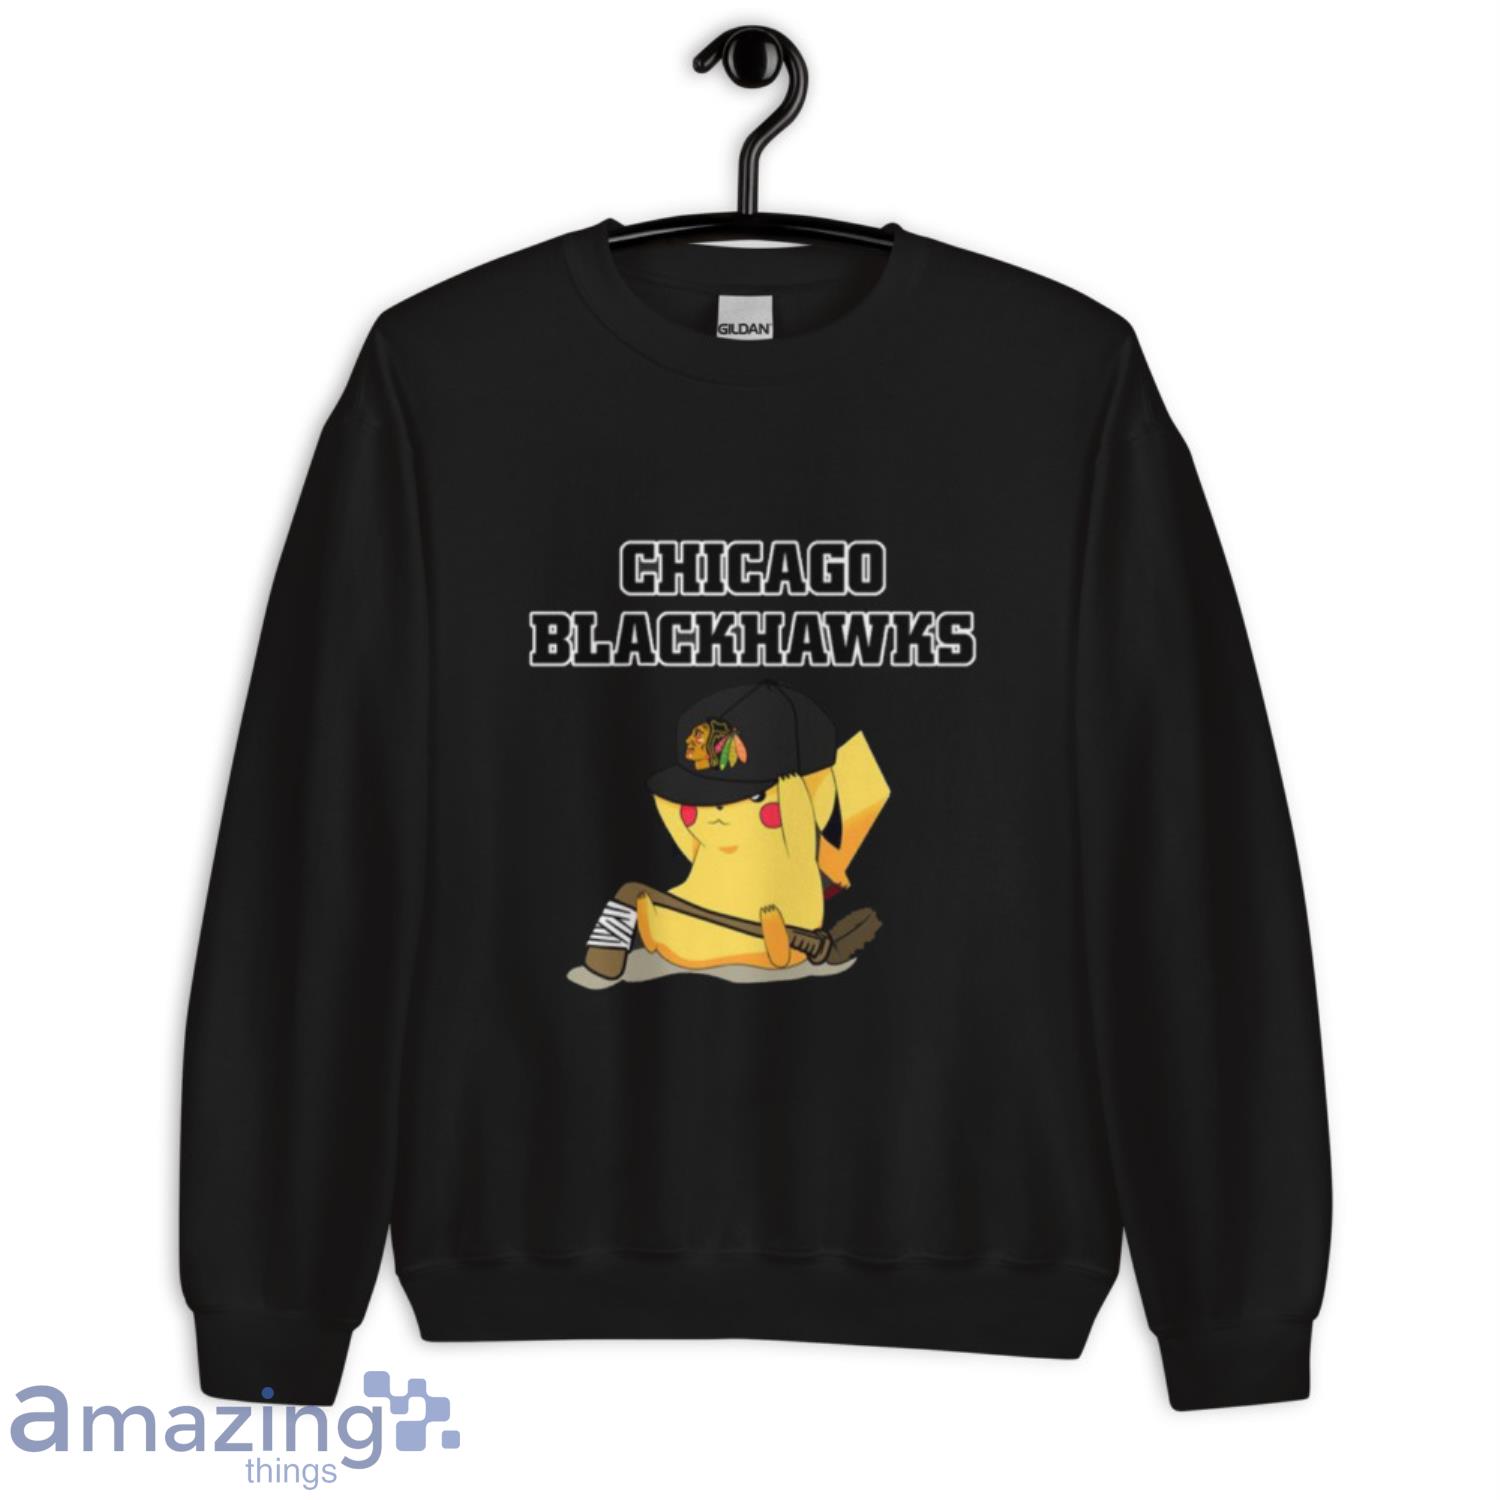 https://image.whatamazingthings.com/2023/05/nhl-pikachu-hockey-sports-chicago-blackhawks-t-shirt-2.jpeg